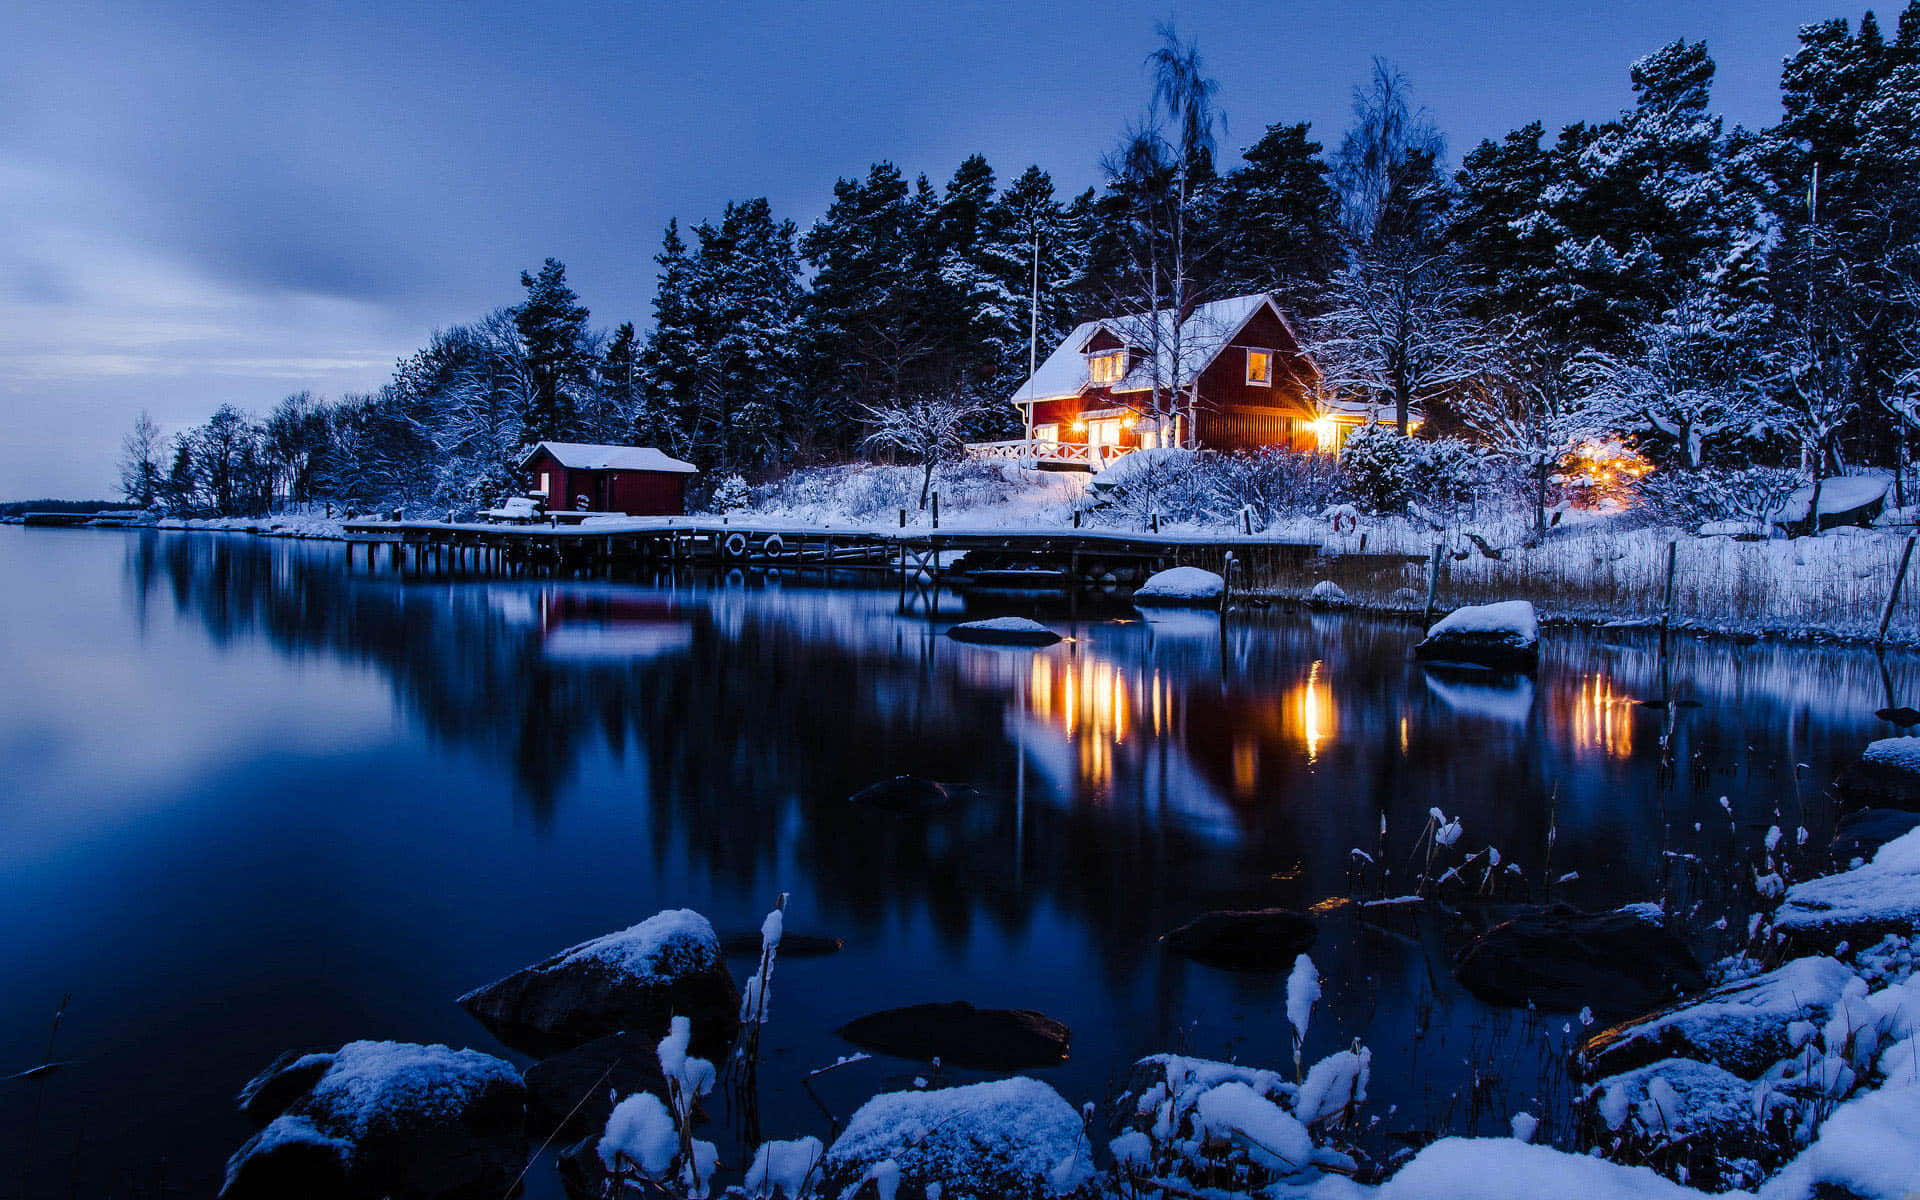 Breathtaking winter landscape of a village nestled in a valley